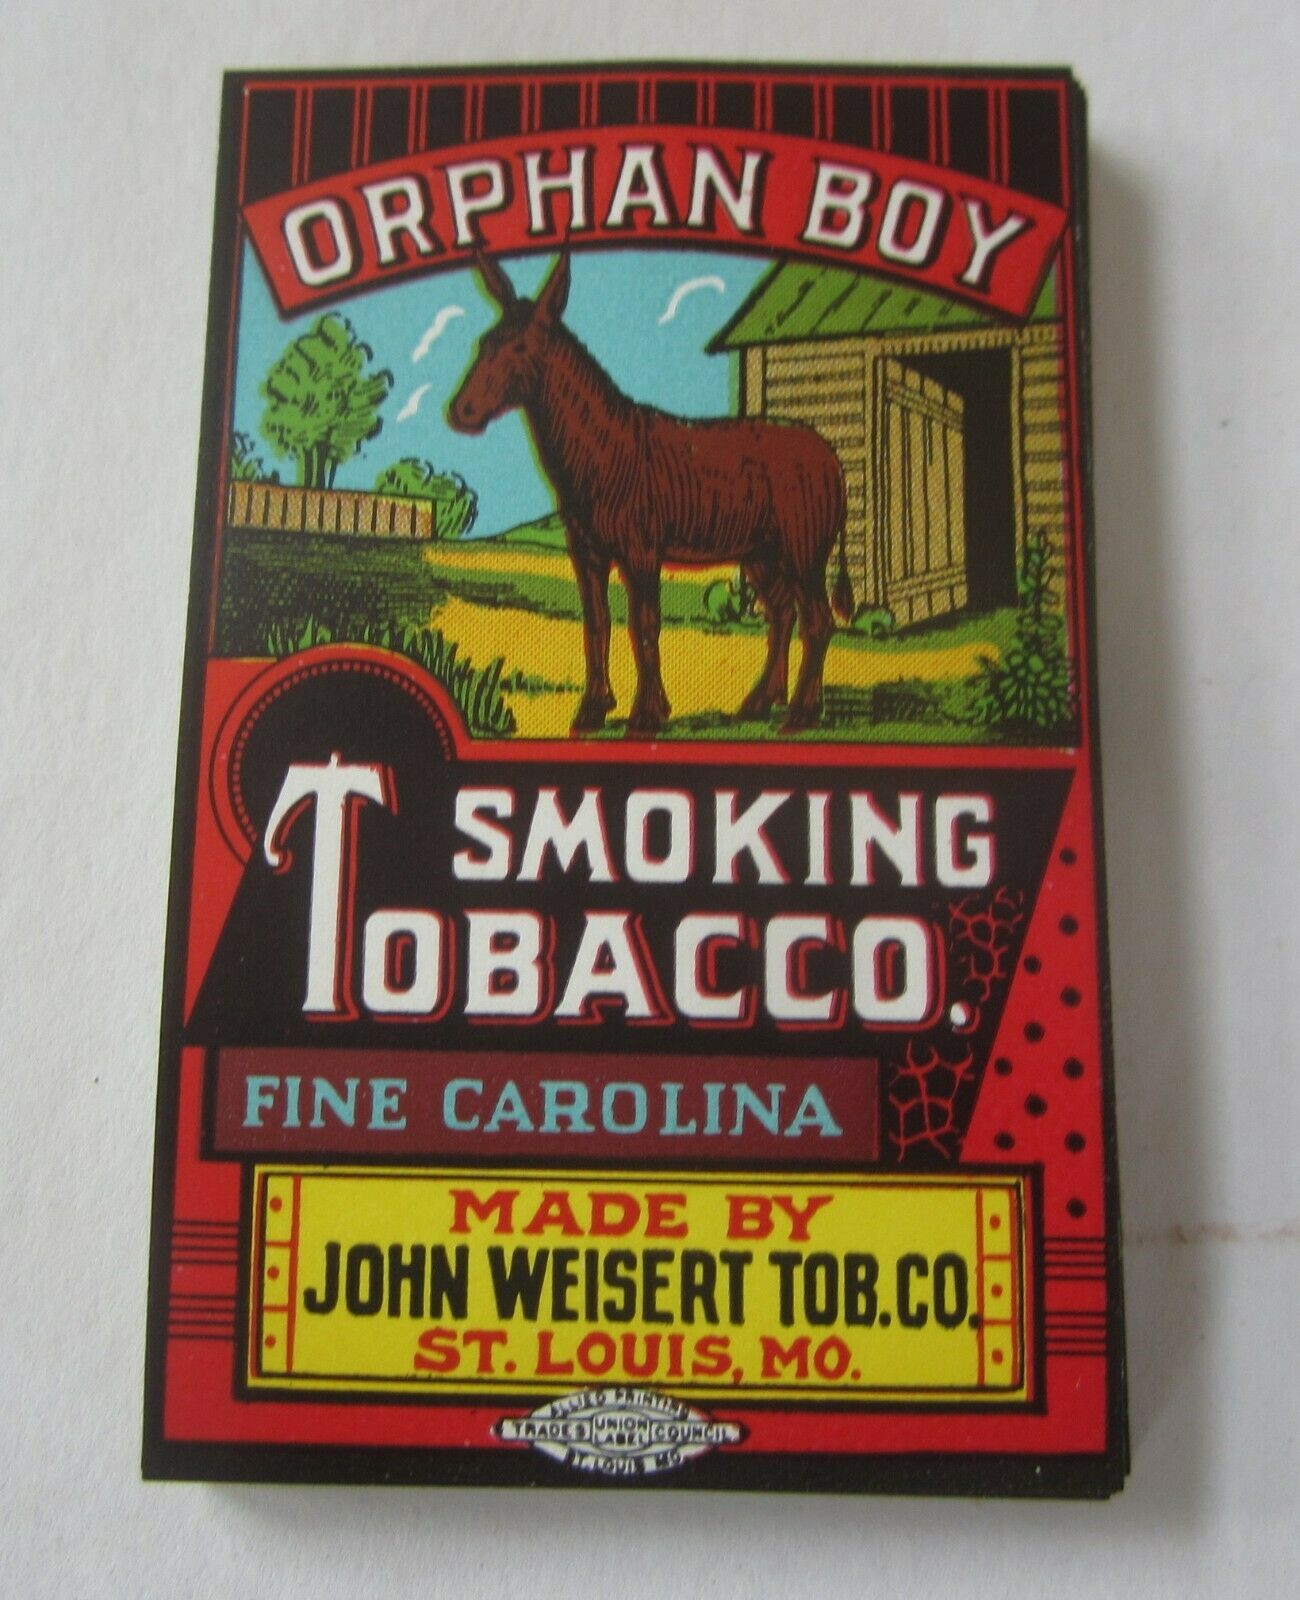  Lot of 50 Old Vintage - ORPHAN BOY - Smoking T...